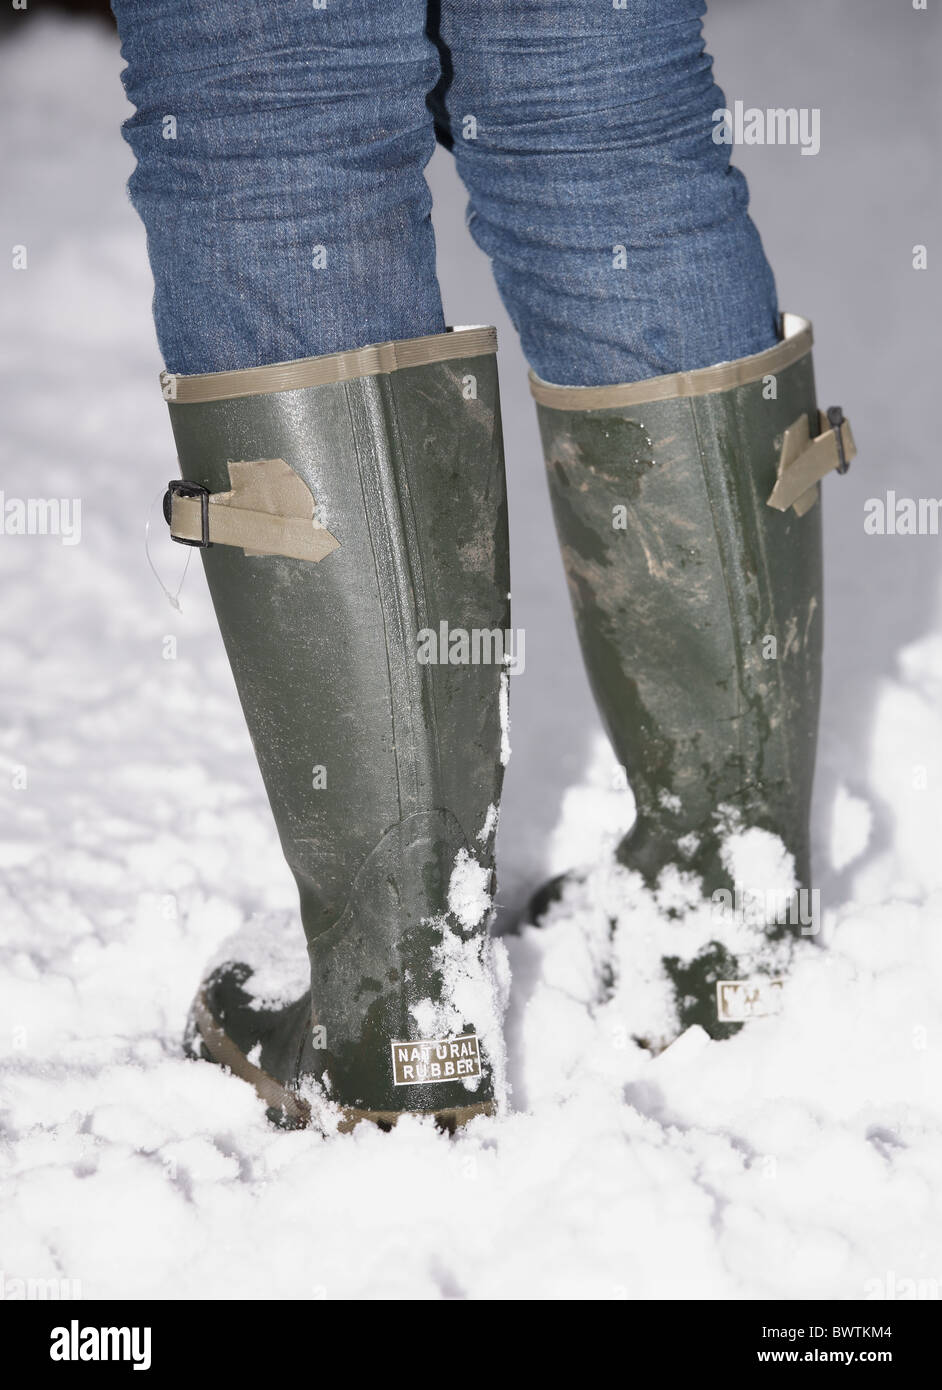 wellington boots in snow Stock Photo - Alamy